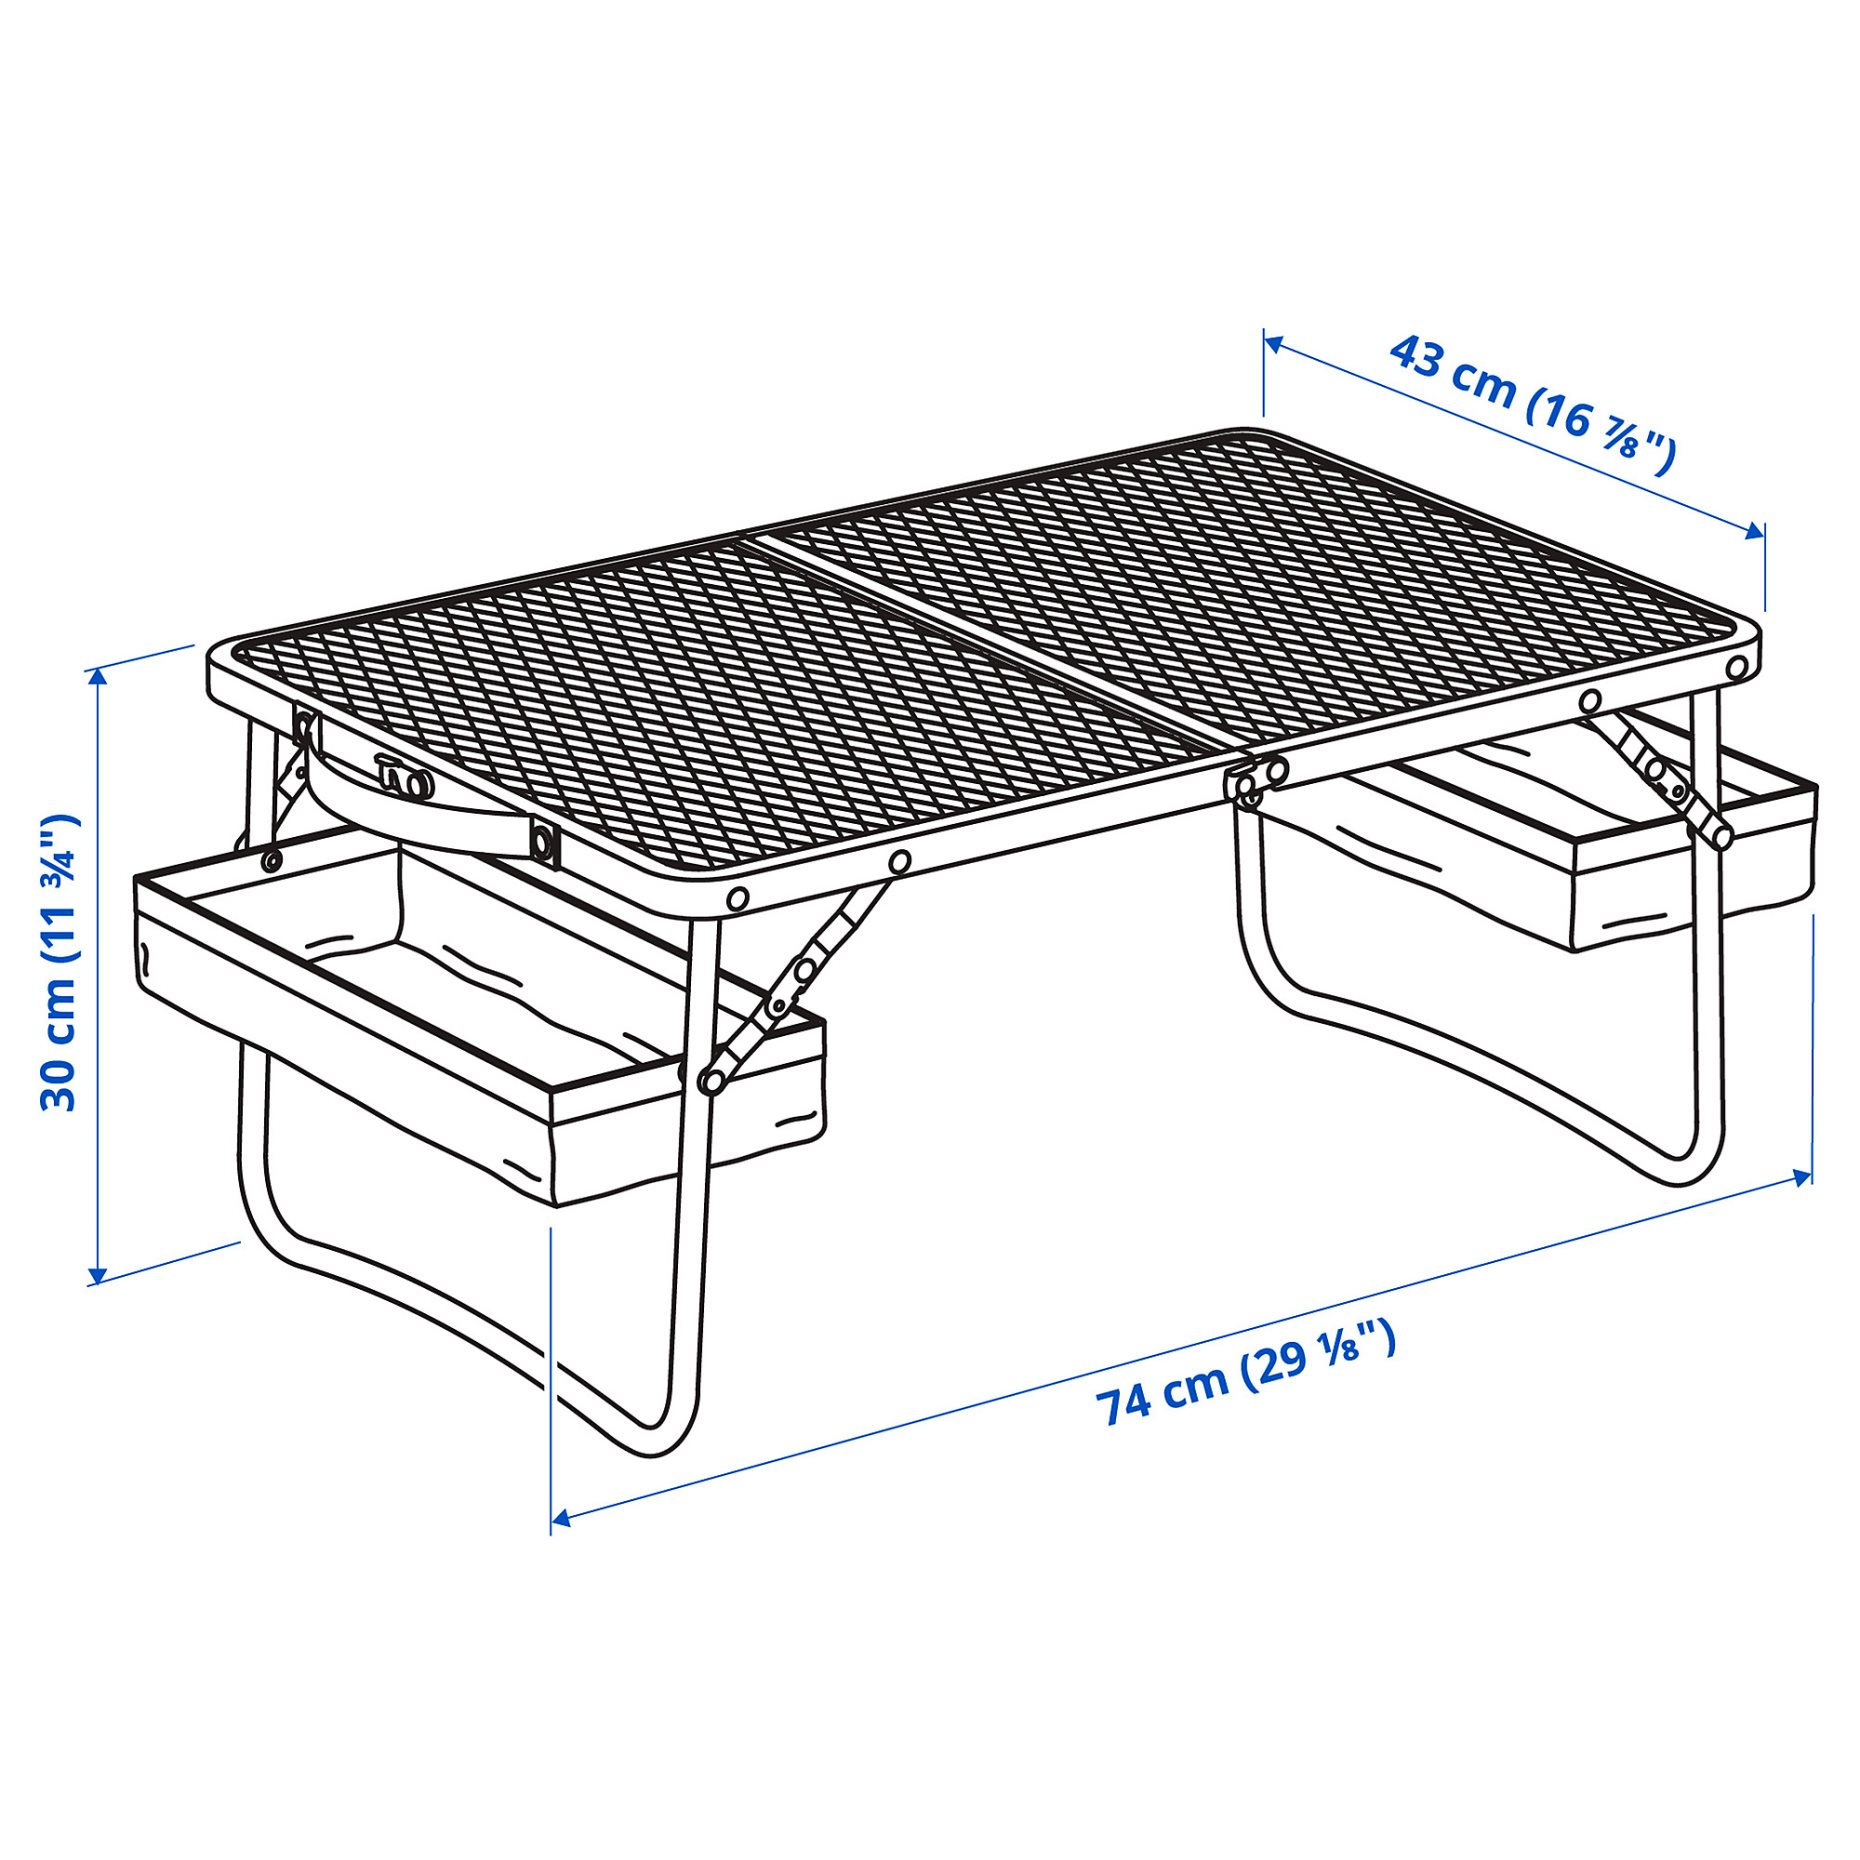 STRANDÖN, πτυσσόμενο τραπέζι, 74x43 cm, 205.758.36